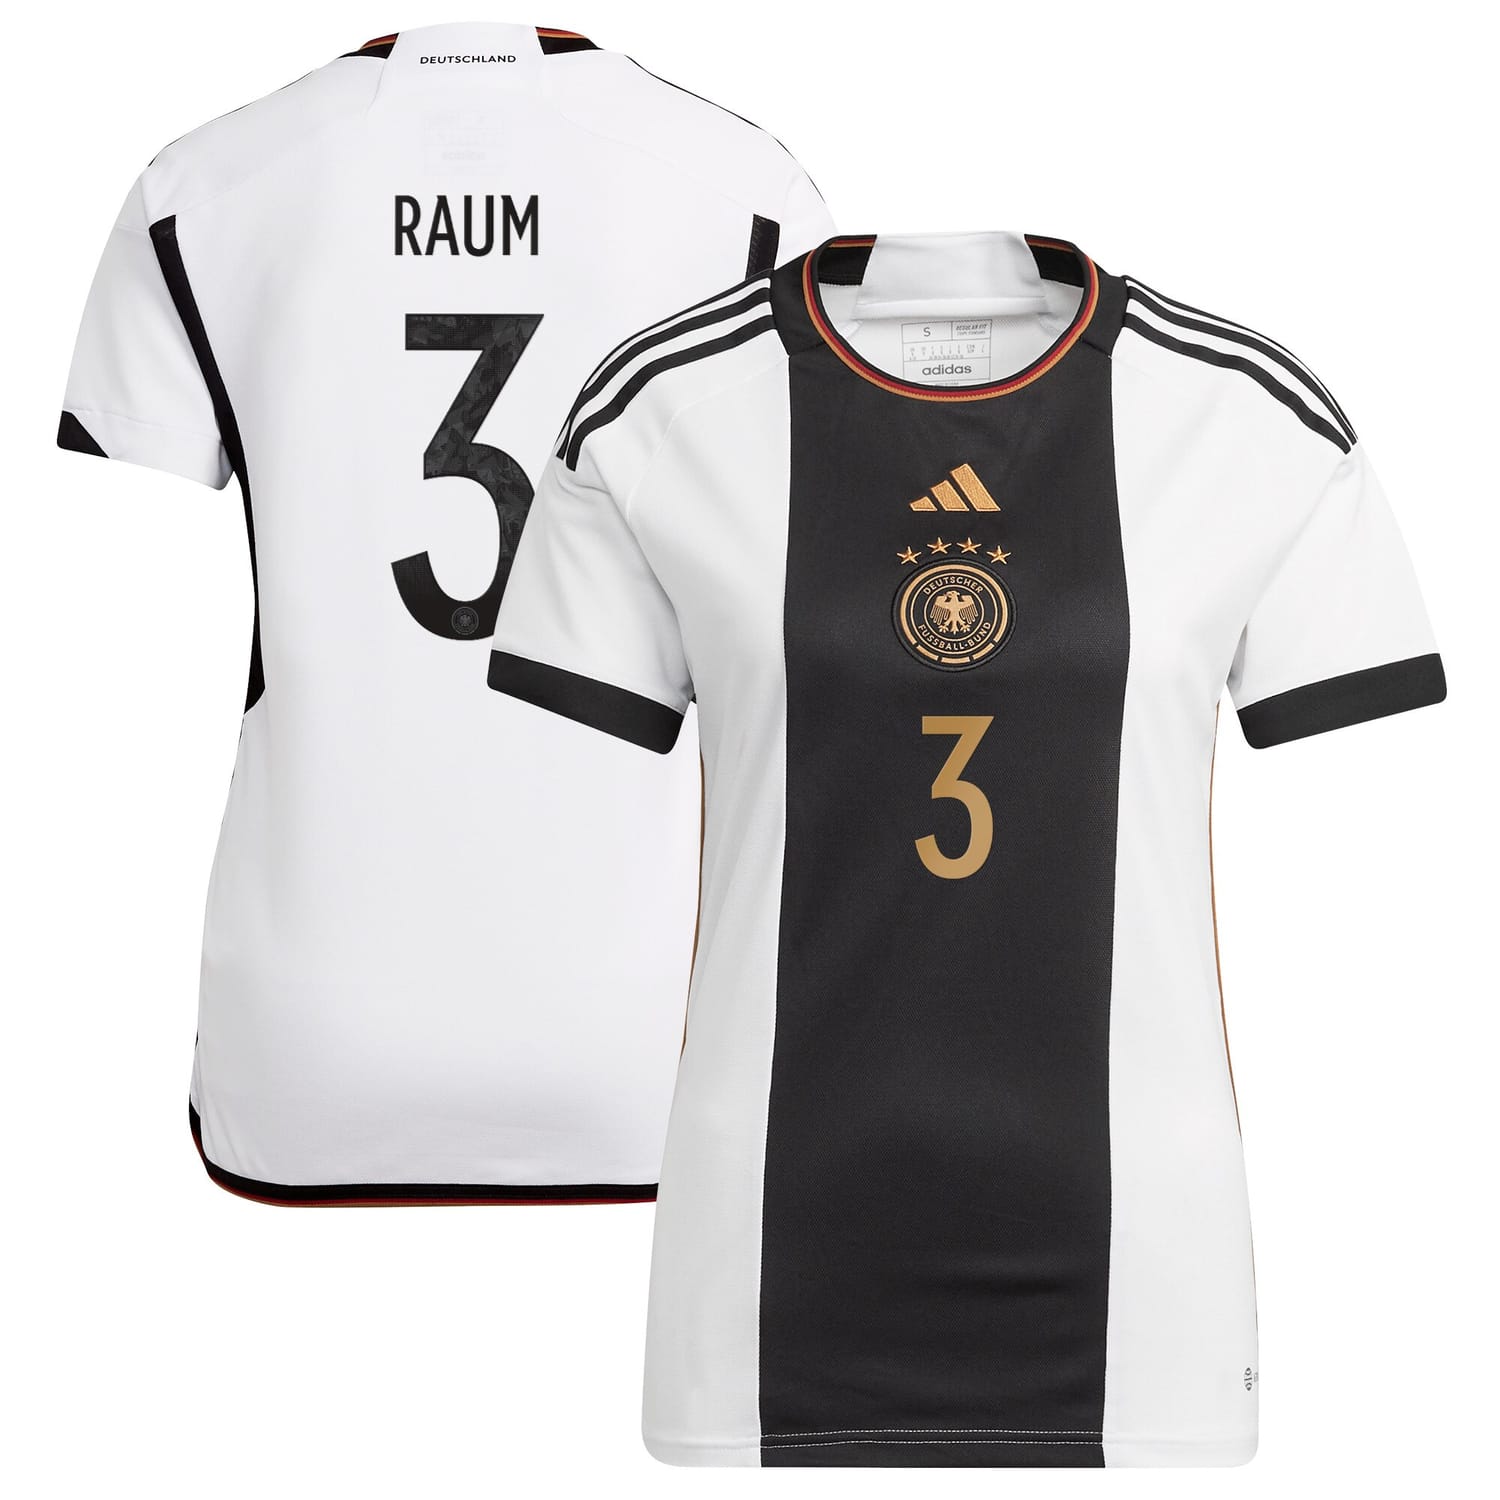 Germany National Team Home Jersey Shirt player David Raum 3 printing for Women